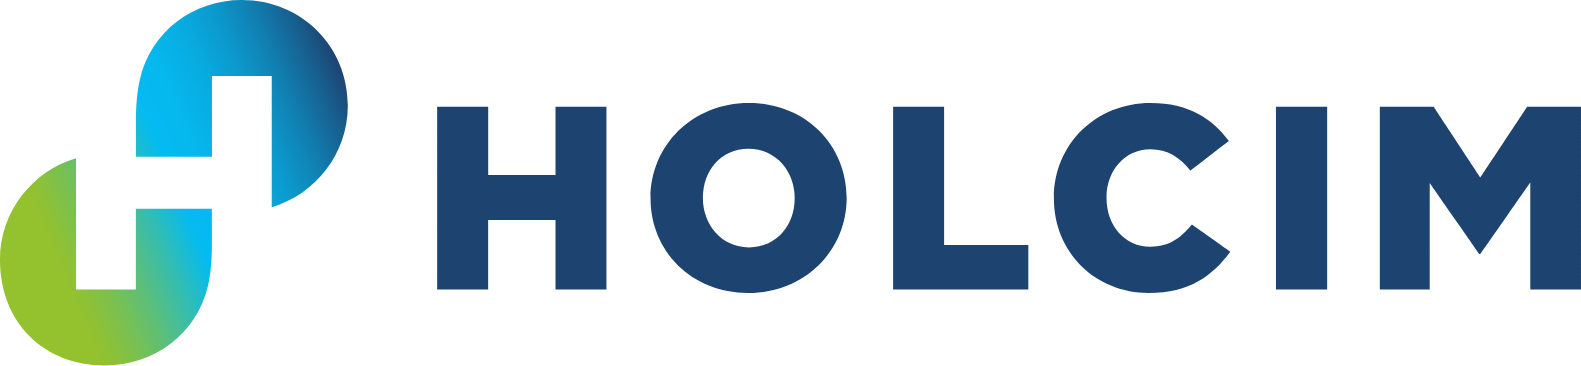 Holcim Group logo large (transparent PNG)